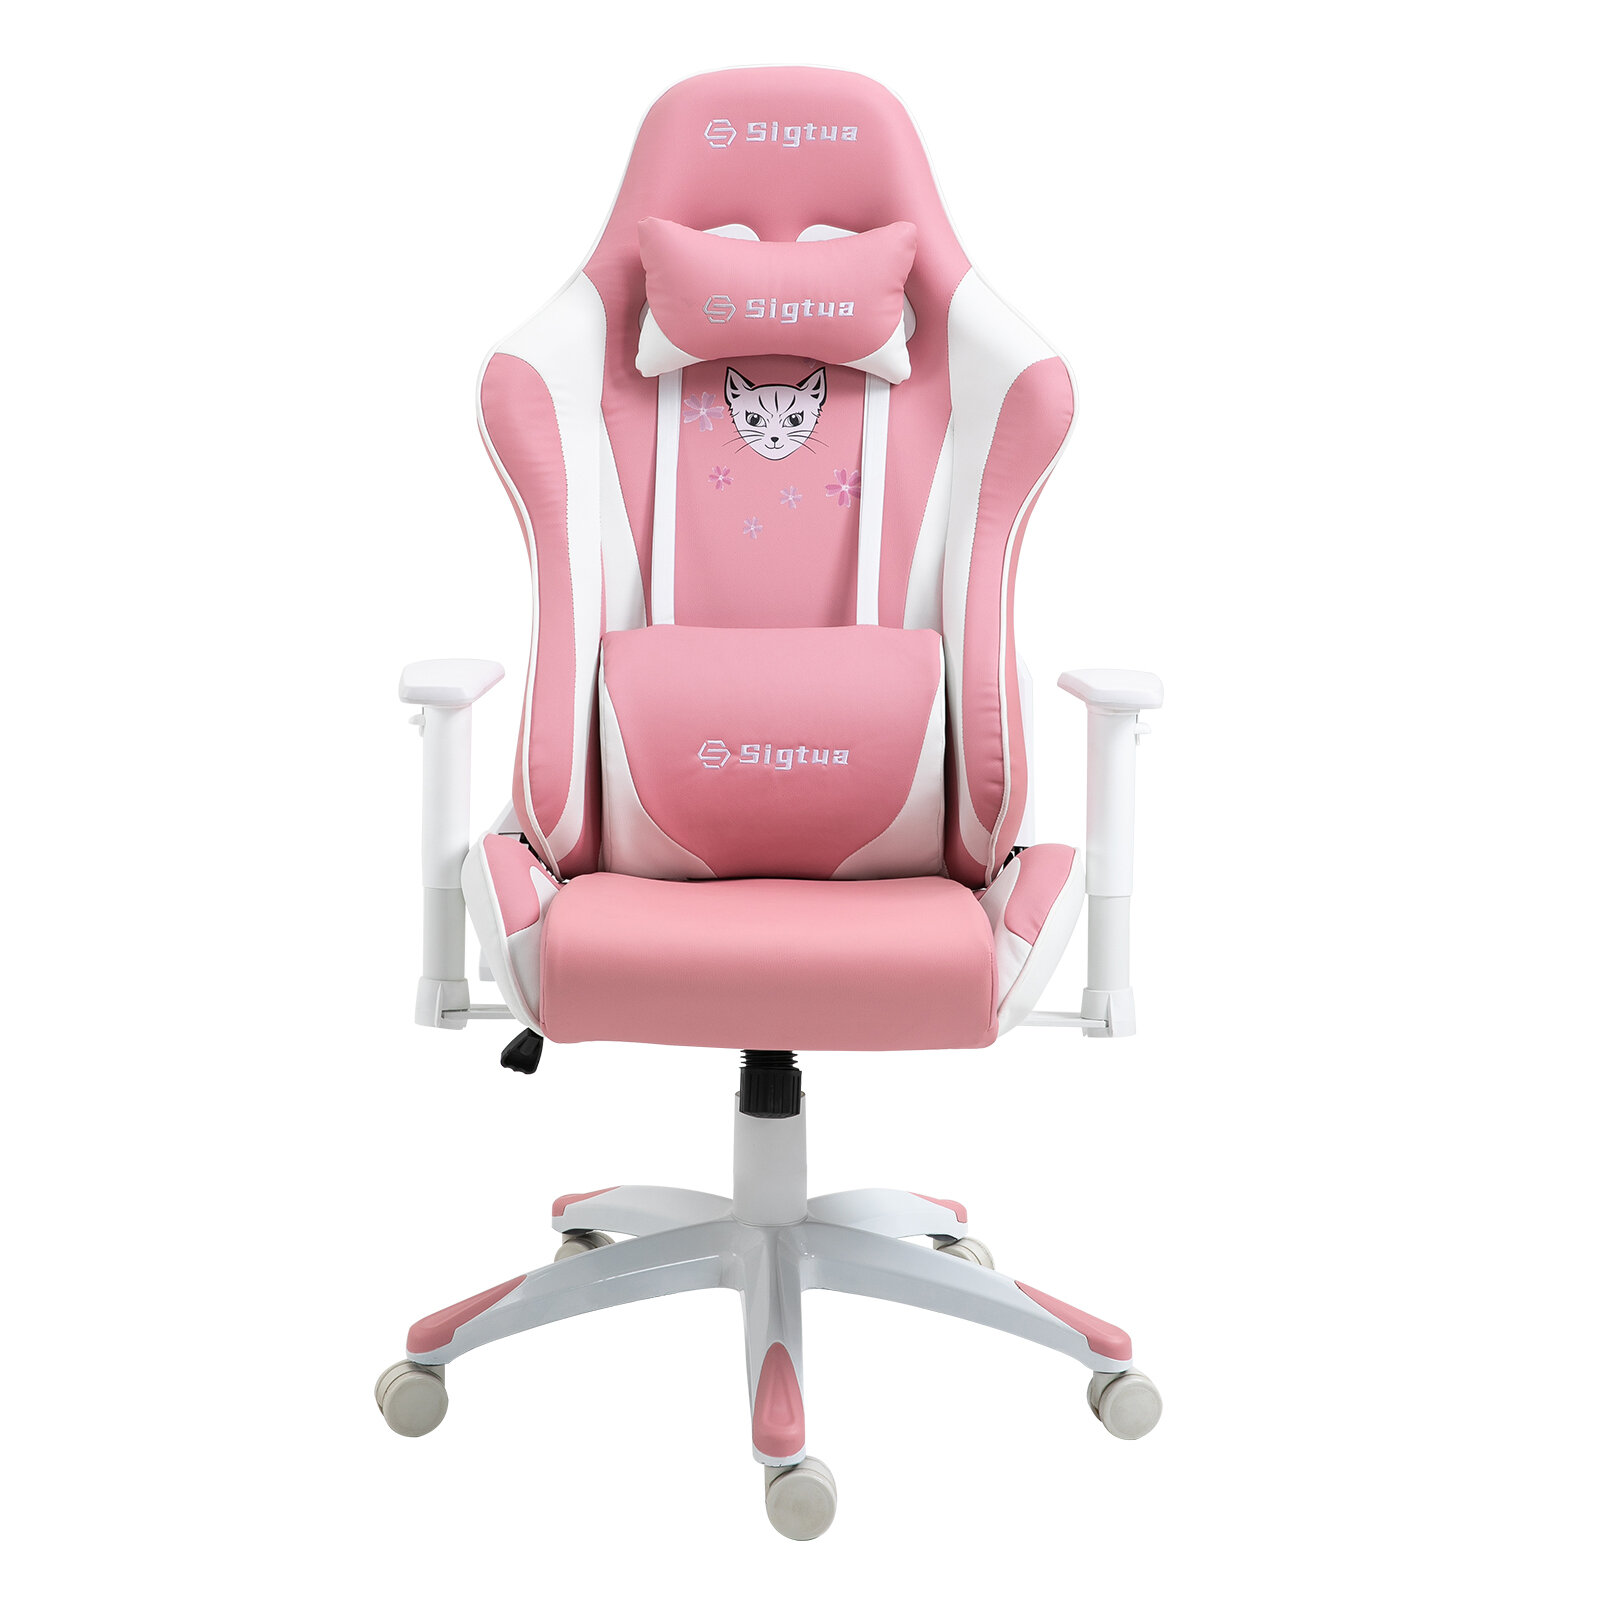 Sigtua Pink Ergonomic High Back Racing Gaming Chair Wayfair